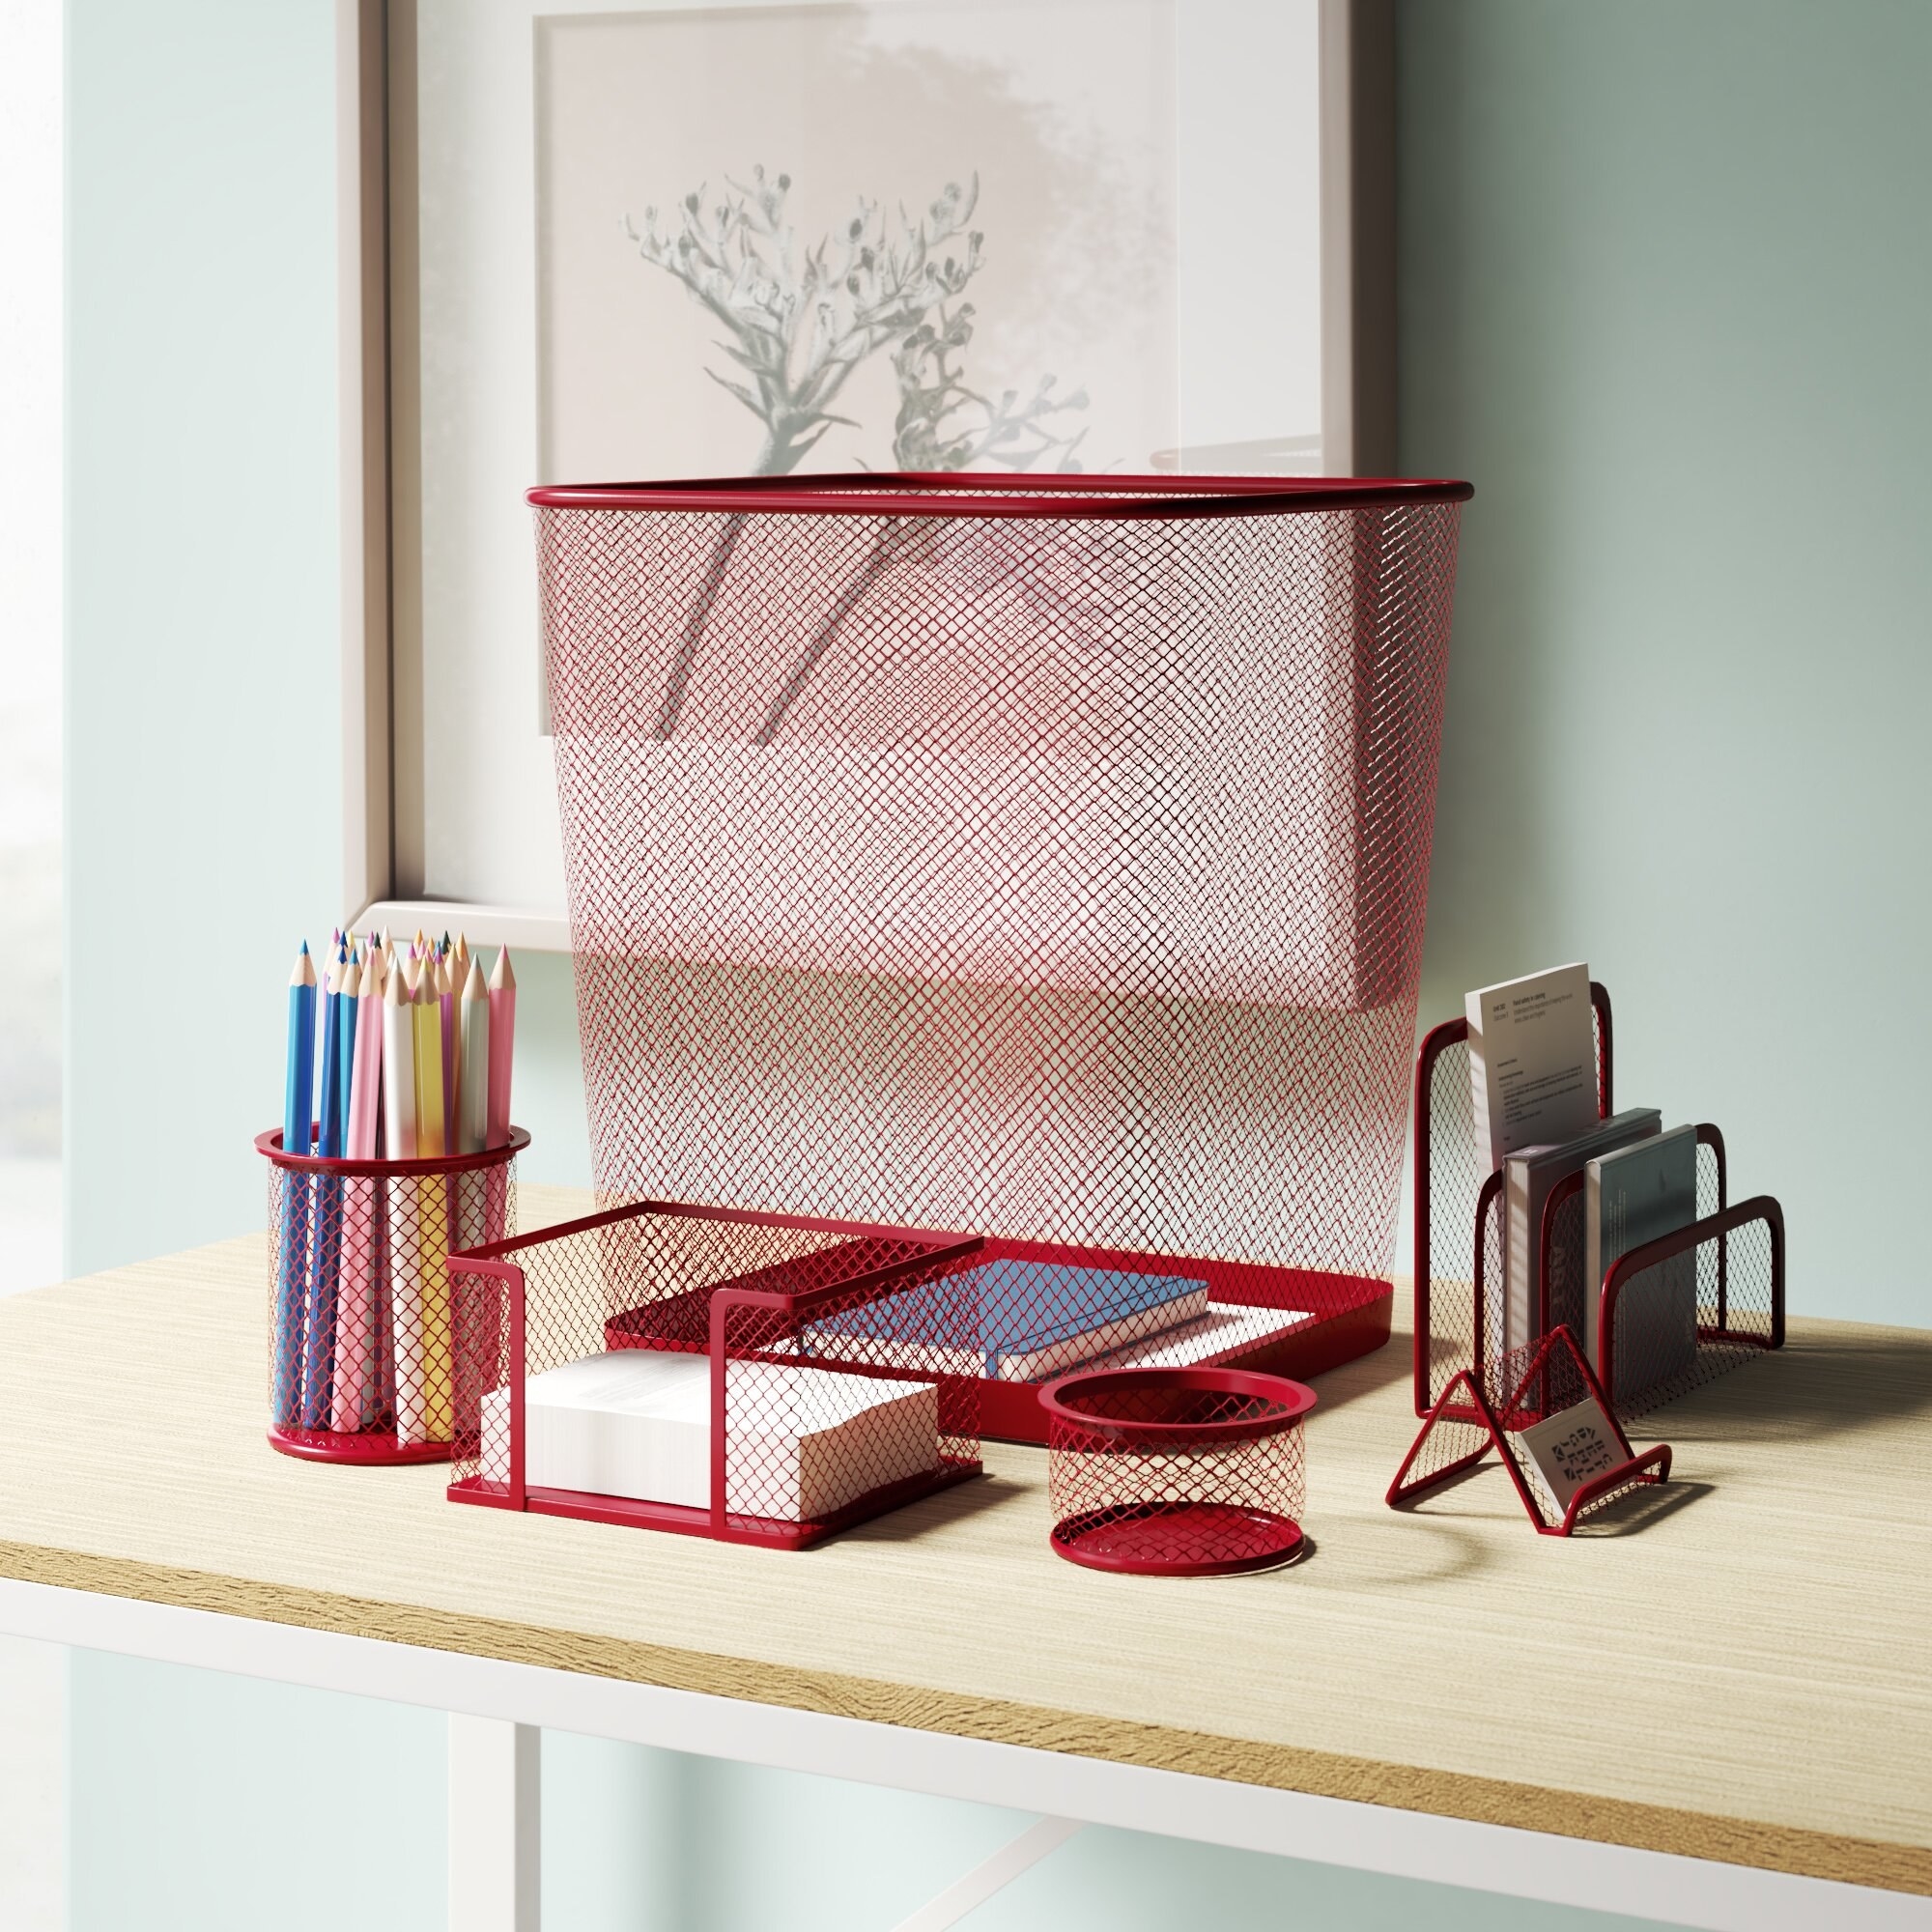 Six-piece red desk organizer set with notebooks, pencils, etc.